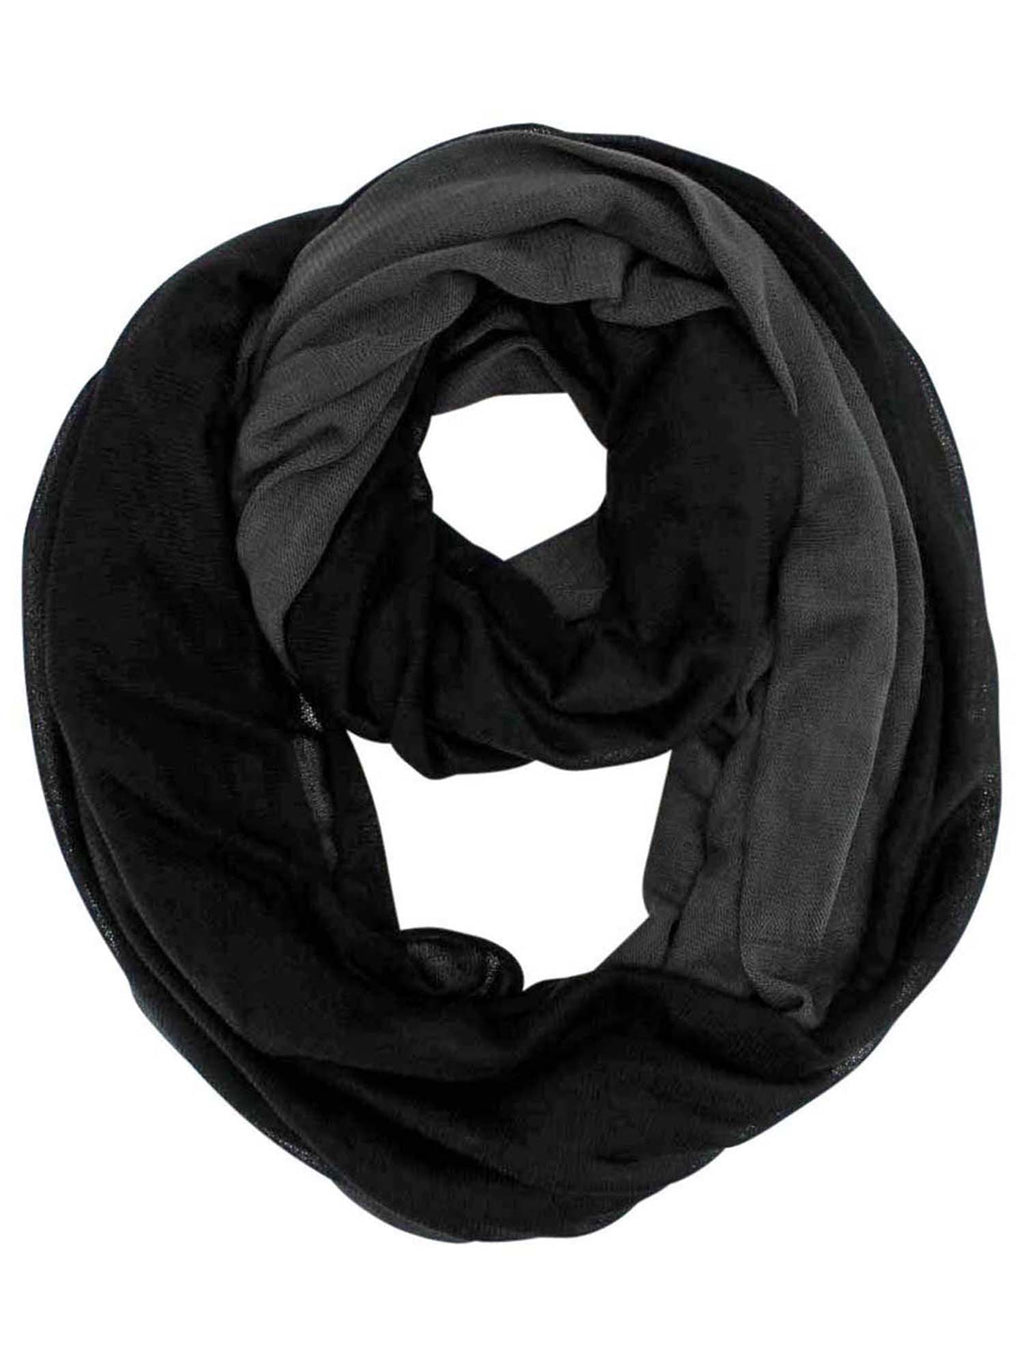 Black & Grey Two-Tone Jersey Knit Infinity Scarf